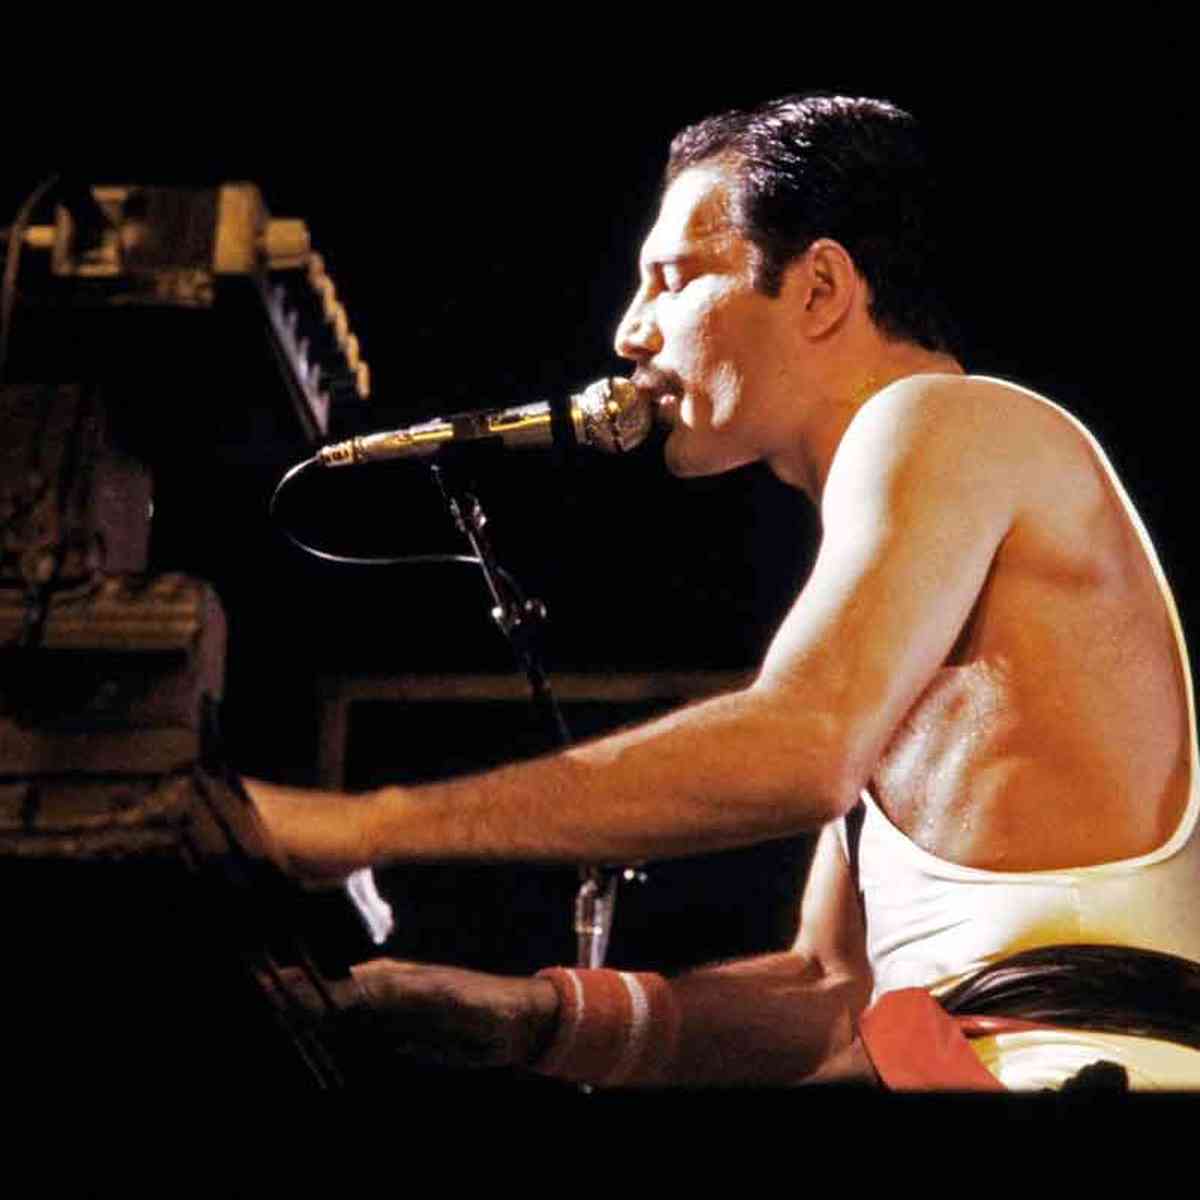 Love of my Life (Freddie Mercury – Queen) – Piano Fácil – Melodia